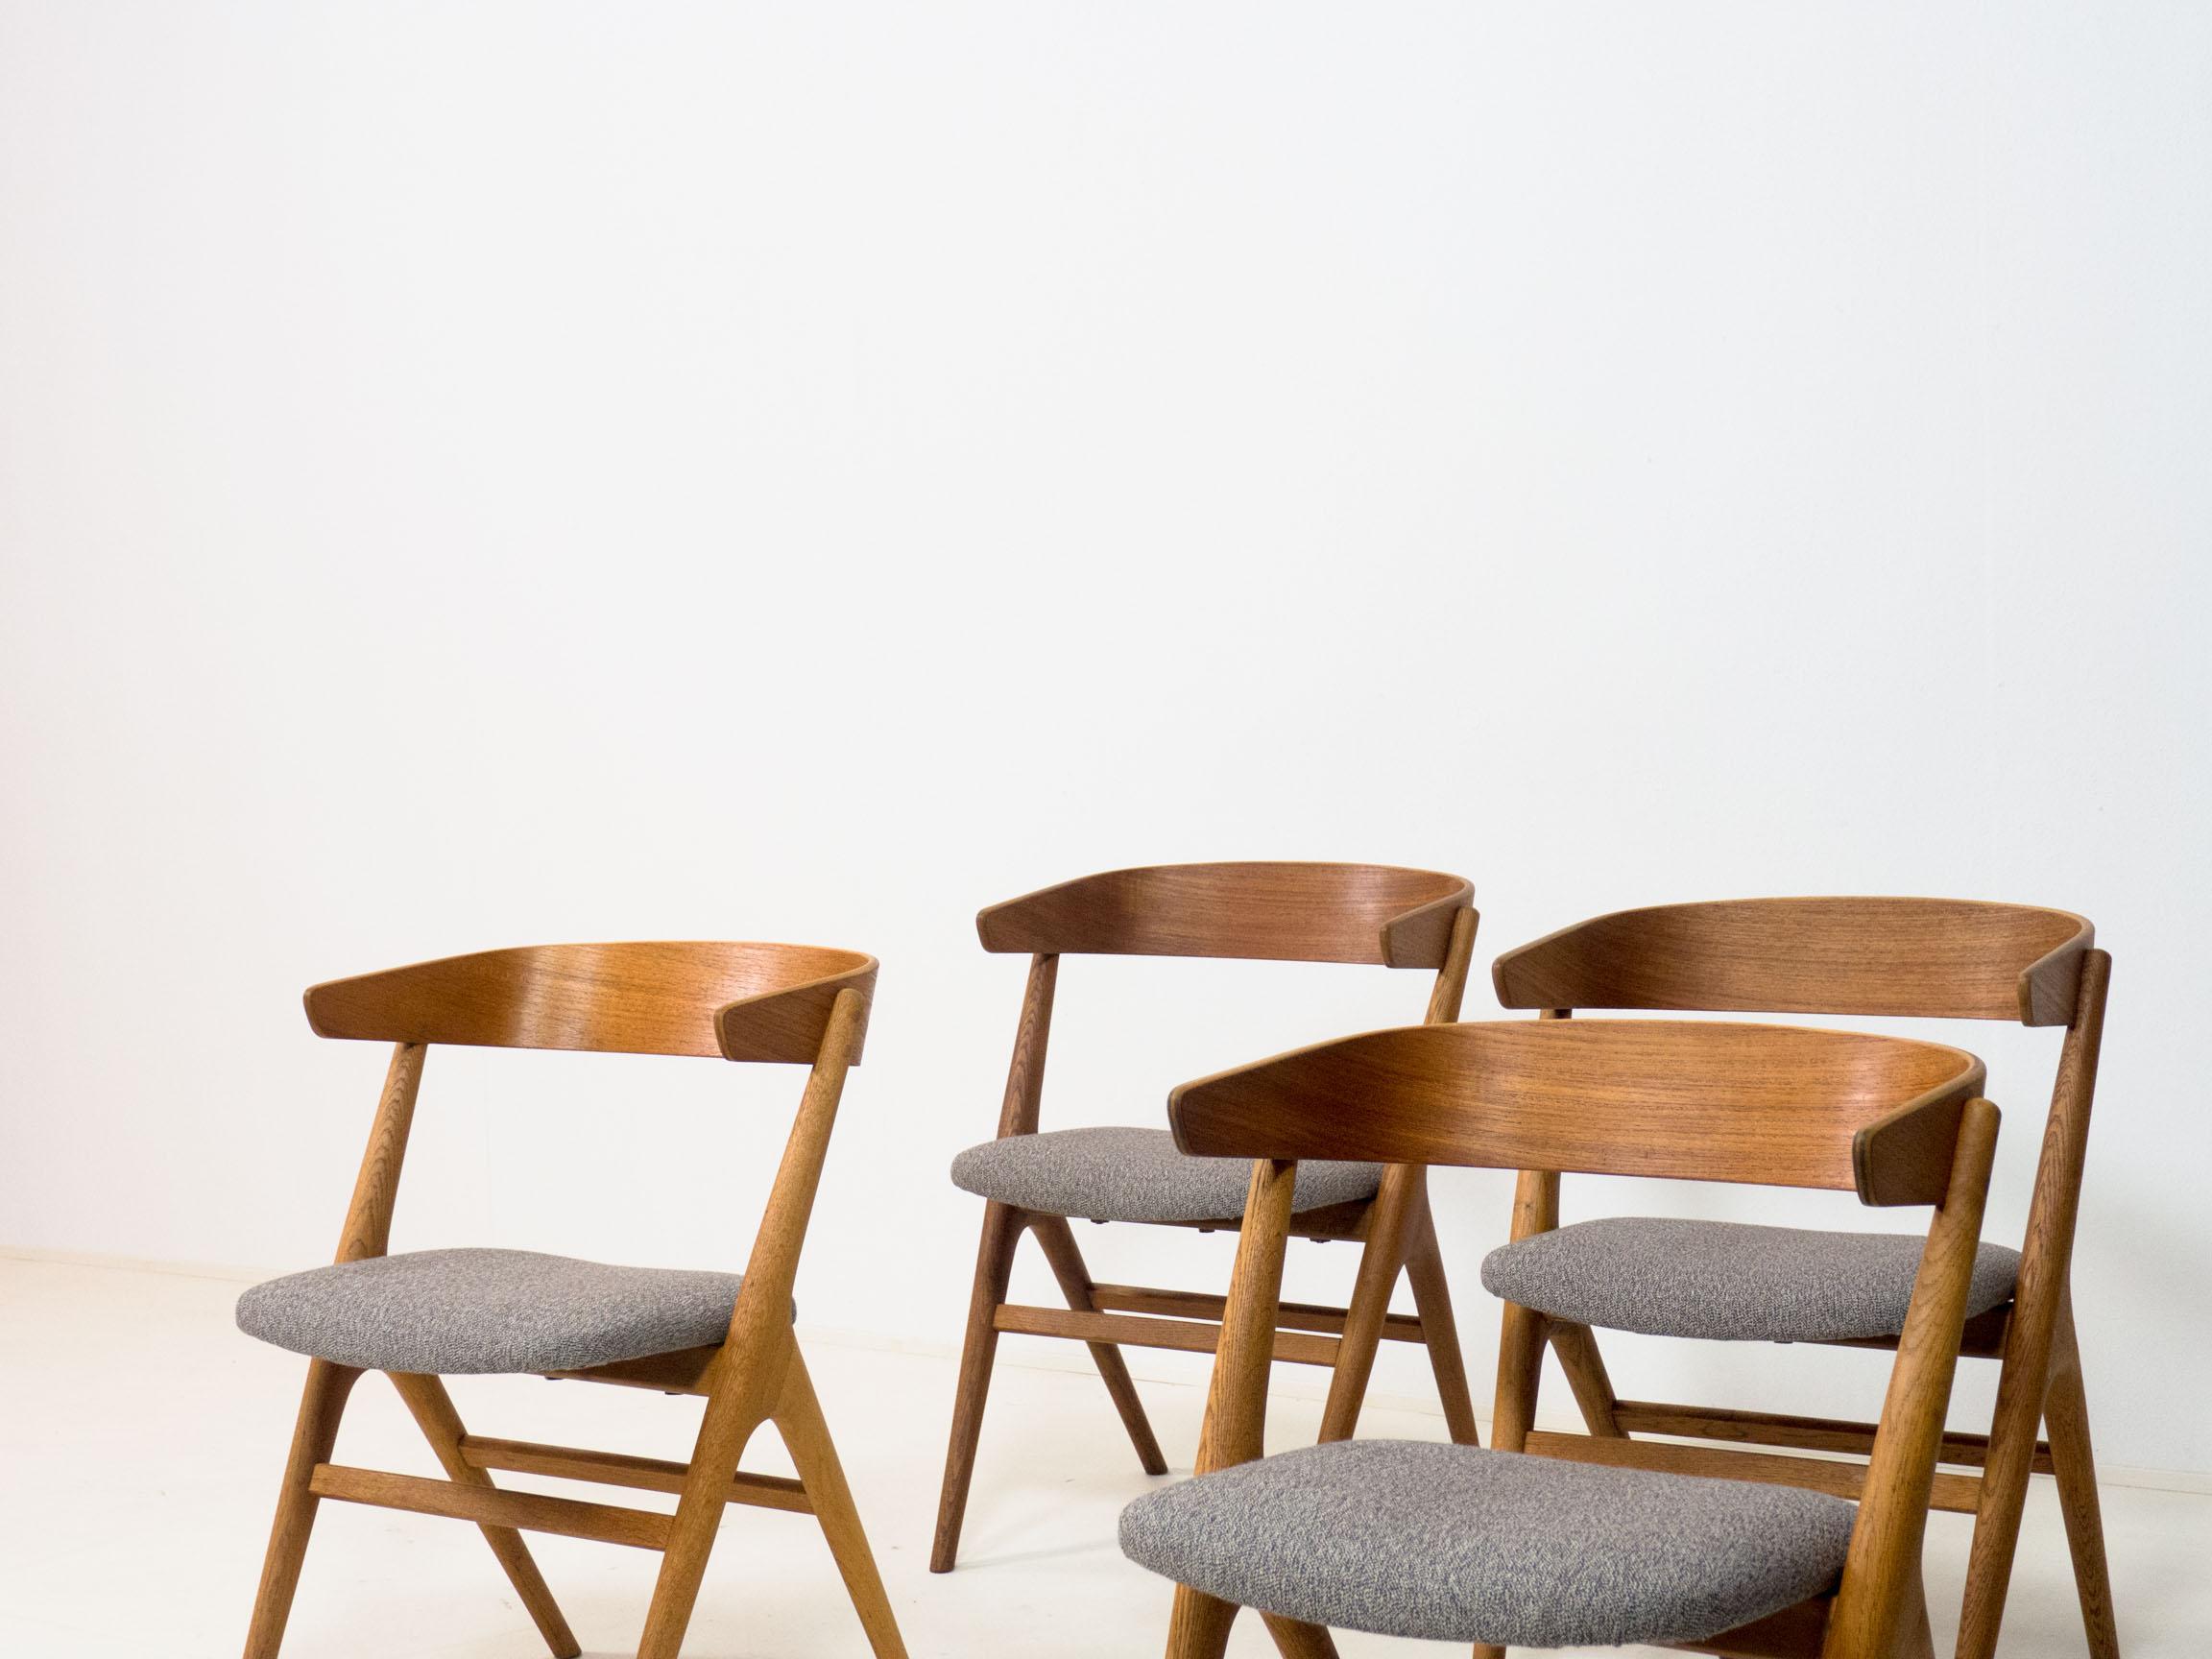 Oiled Sibast Møbler model ‘no. 9’ teak & oak dining chairs – Helge Sibast 